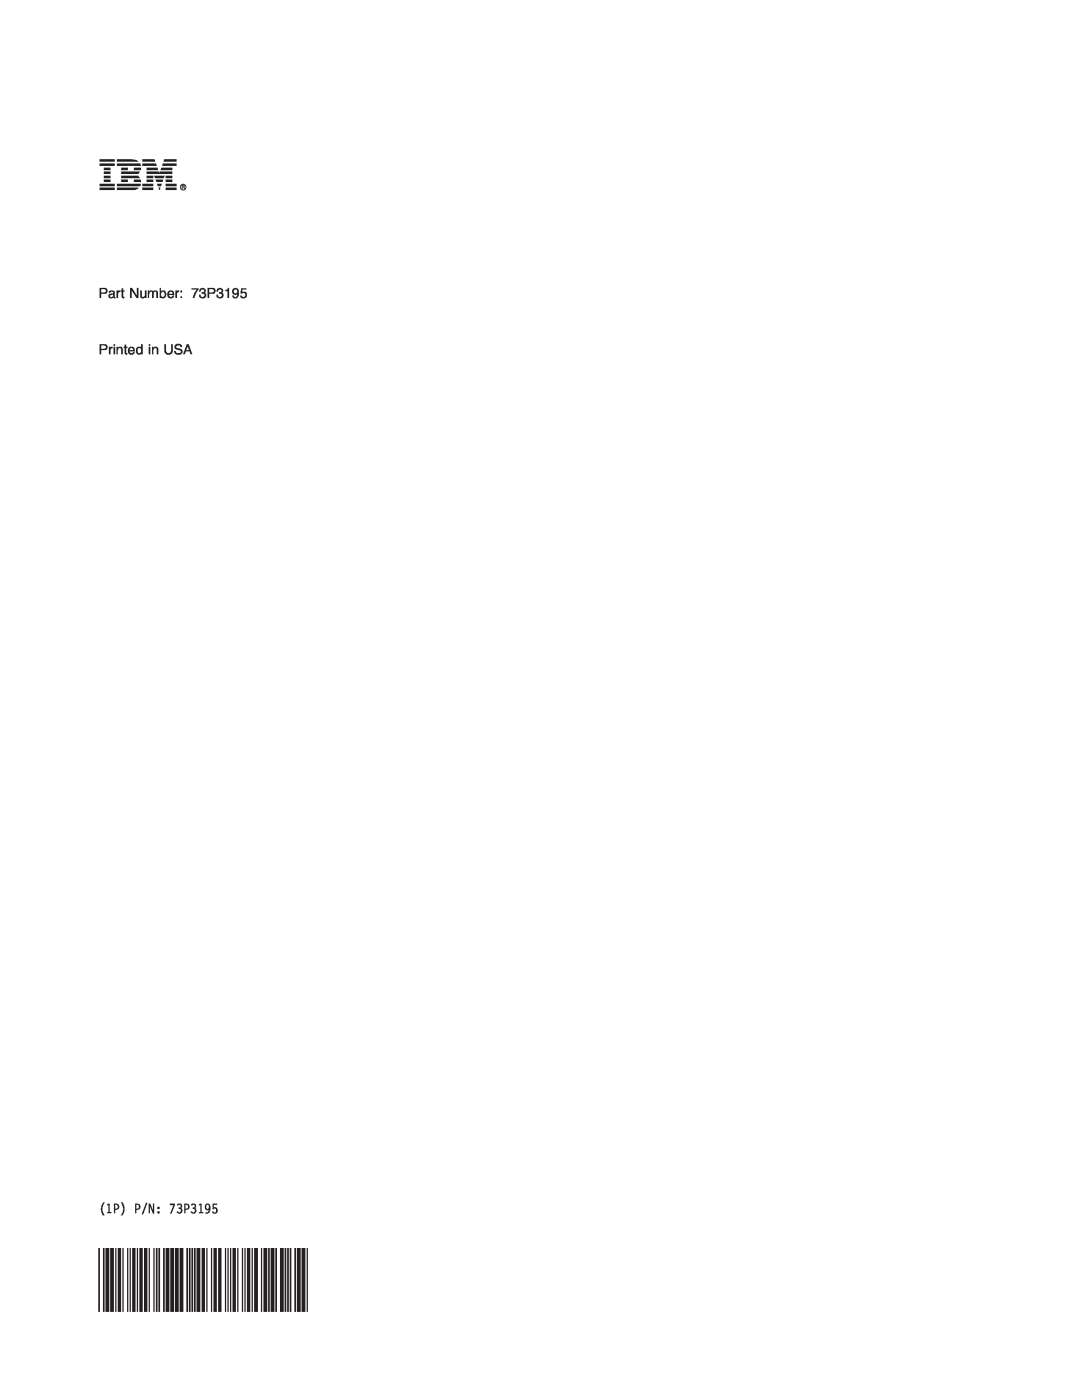 IBM PROJECTOR C400 manual Part Number 73P3195 Printed in USA, 1P P/N 73P3195 